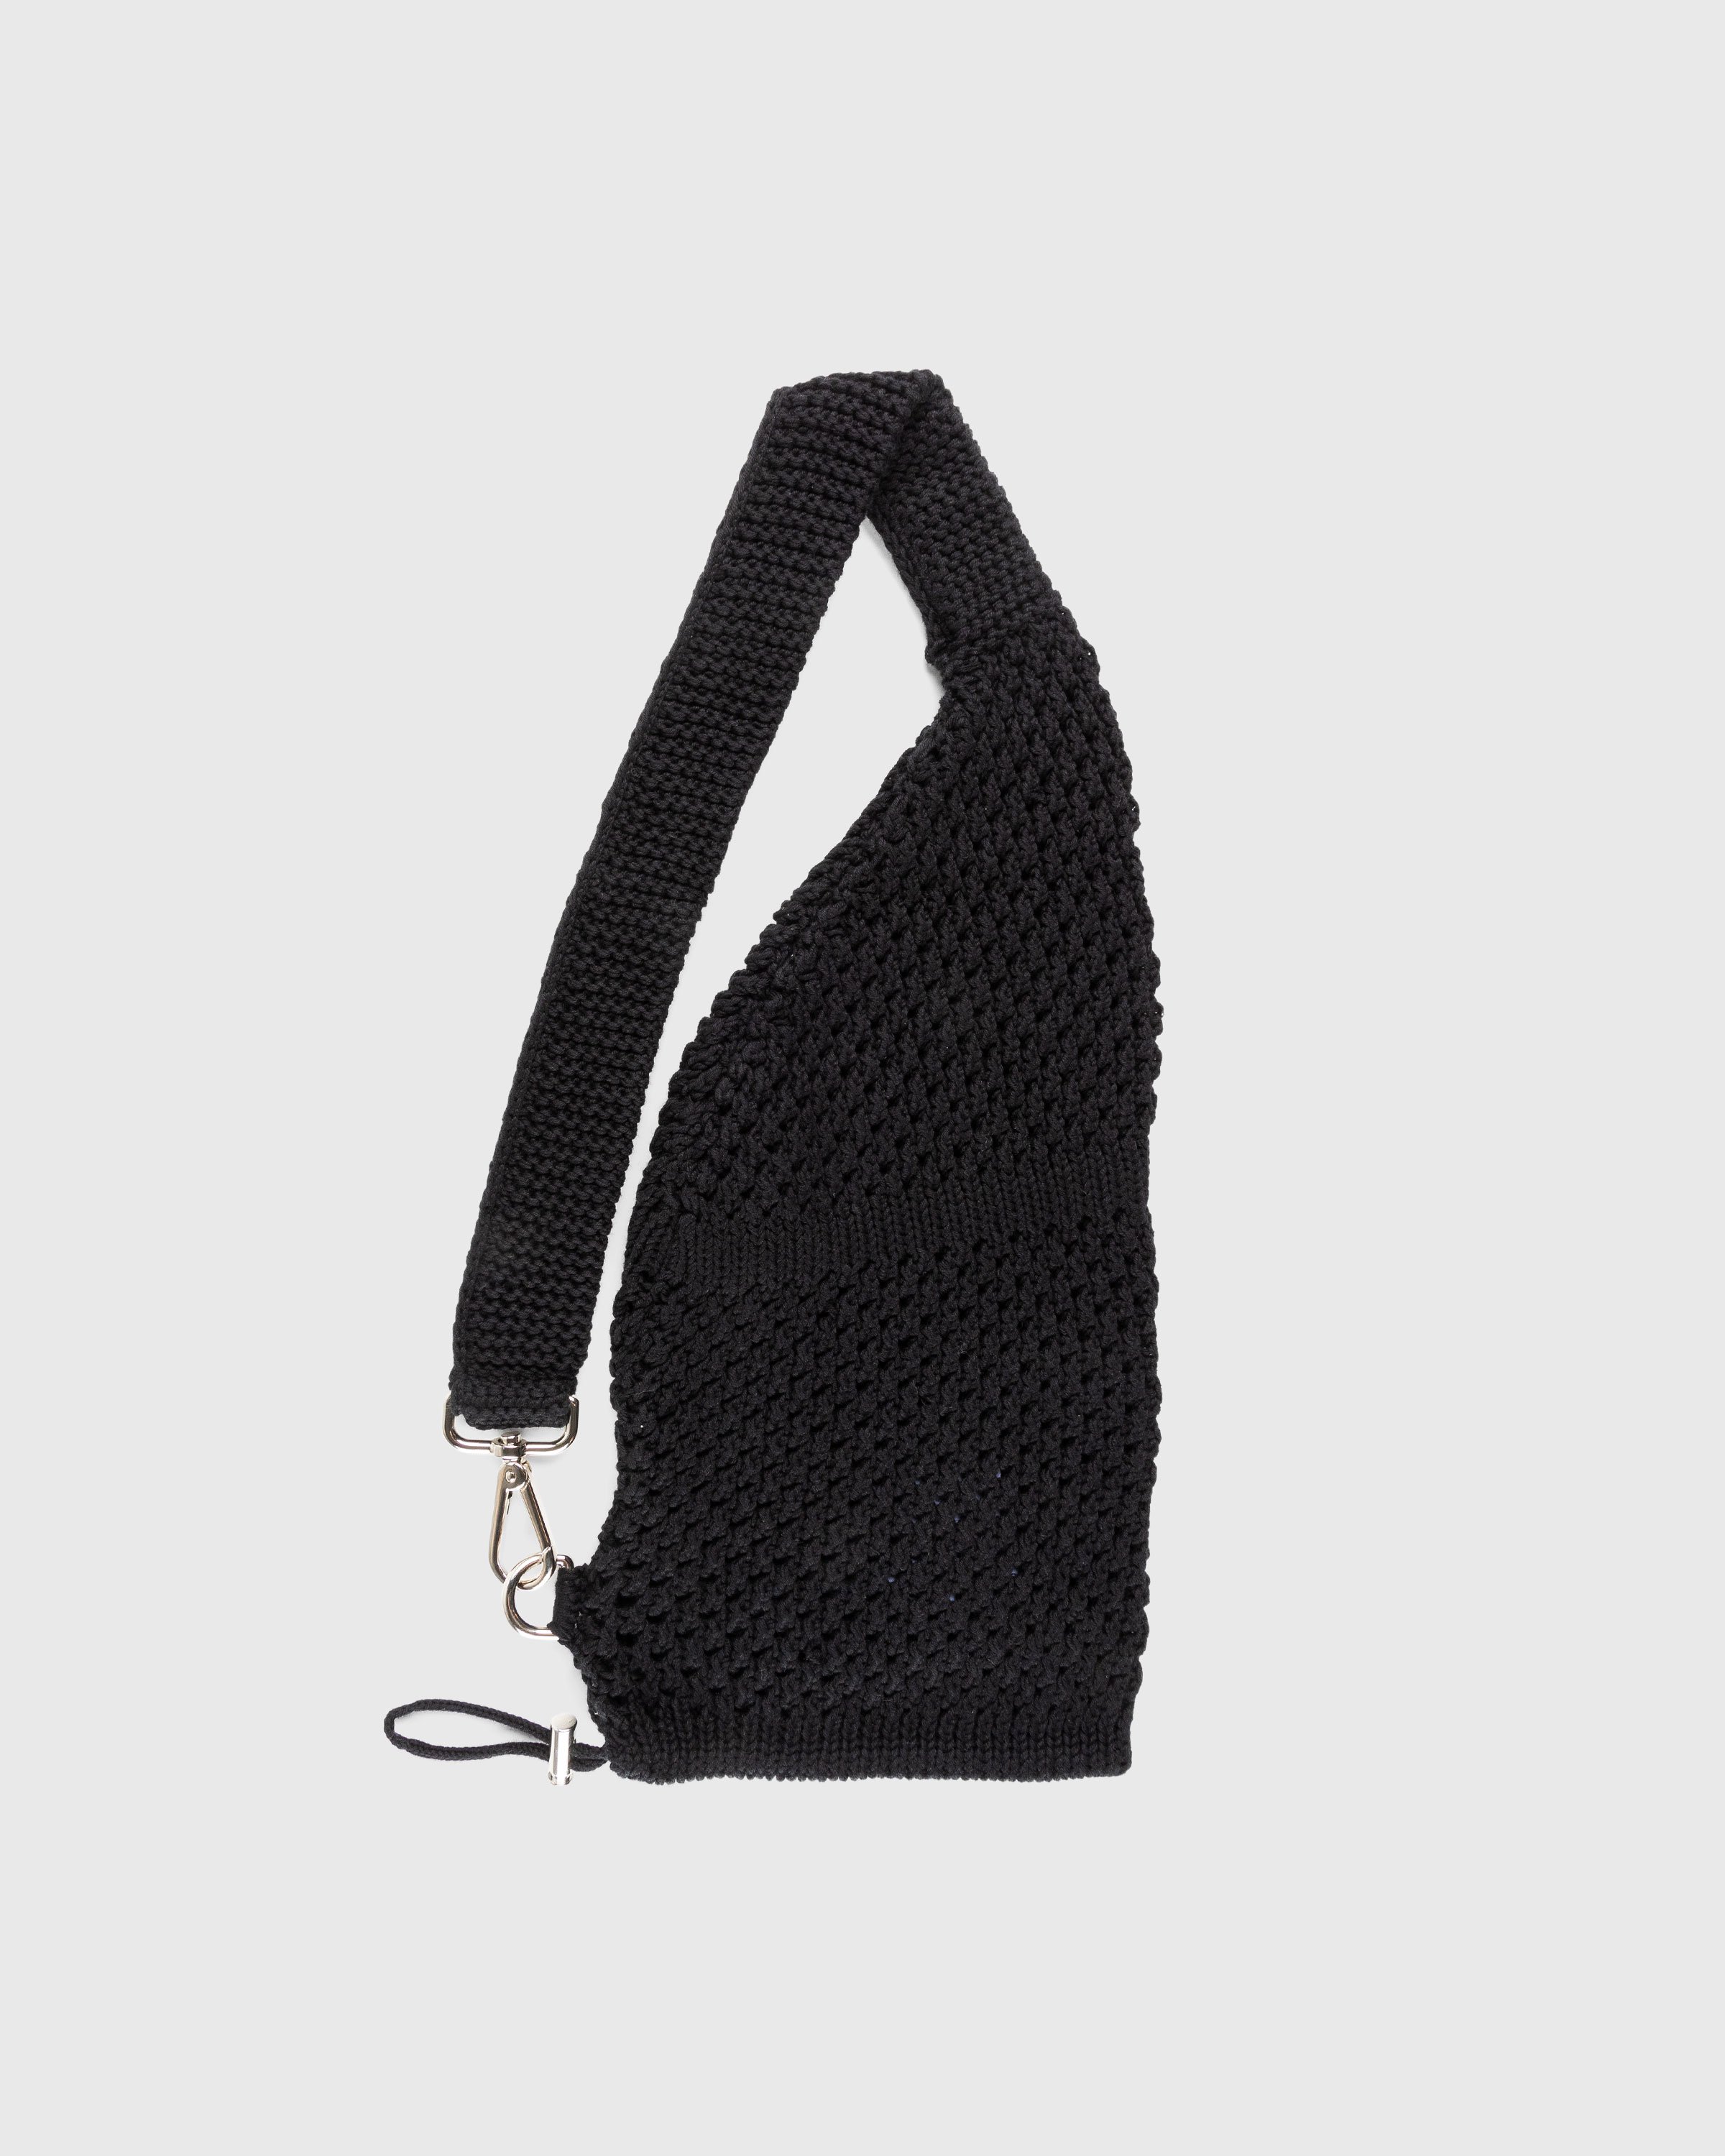 SSU - Mesh Stitch Knitted Bag Black - Accessories - Black - Image 2